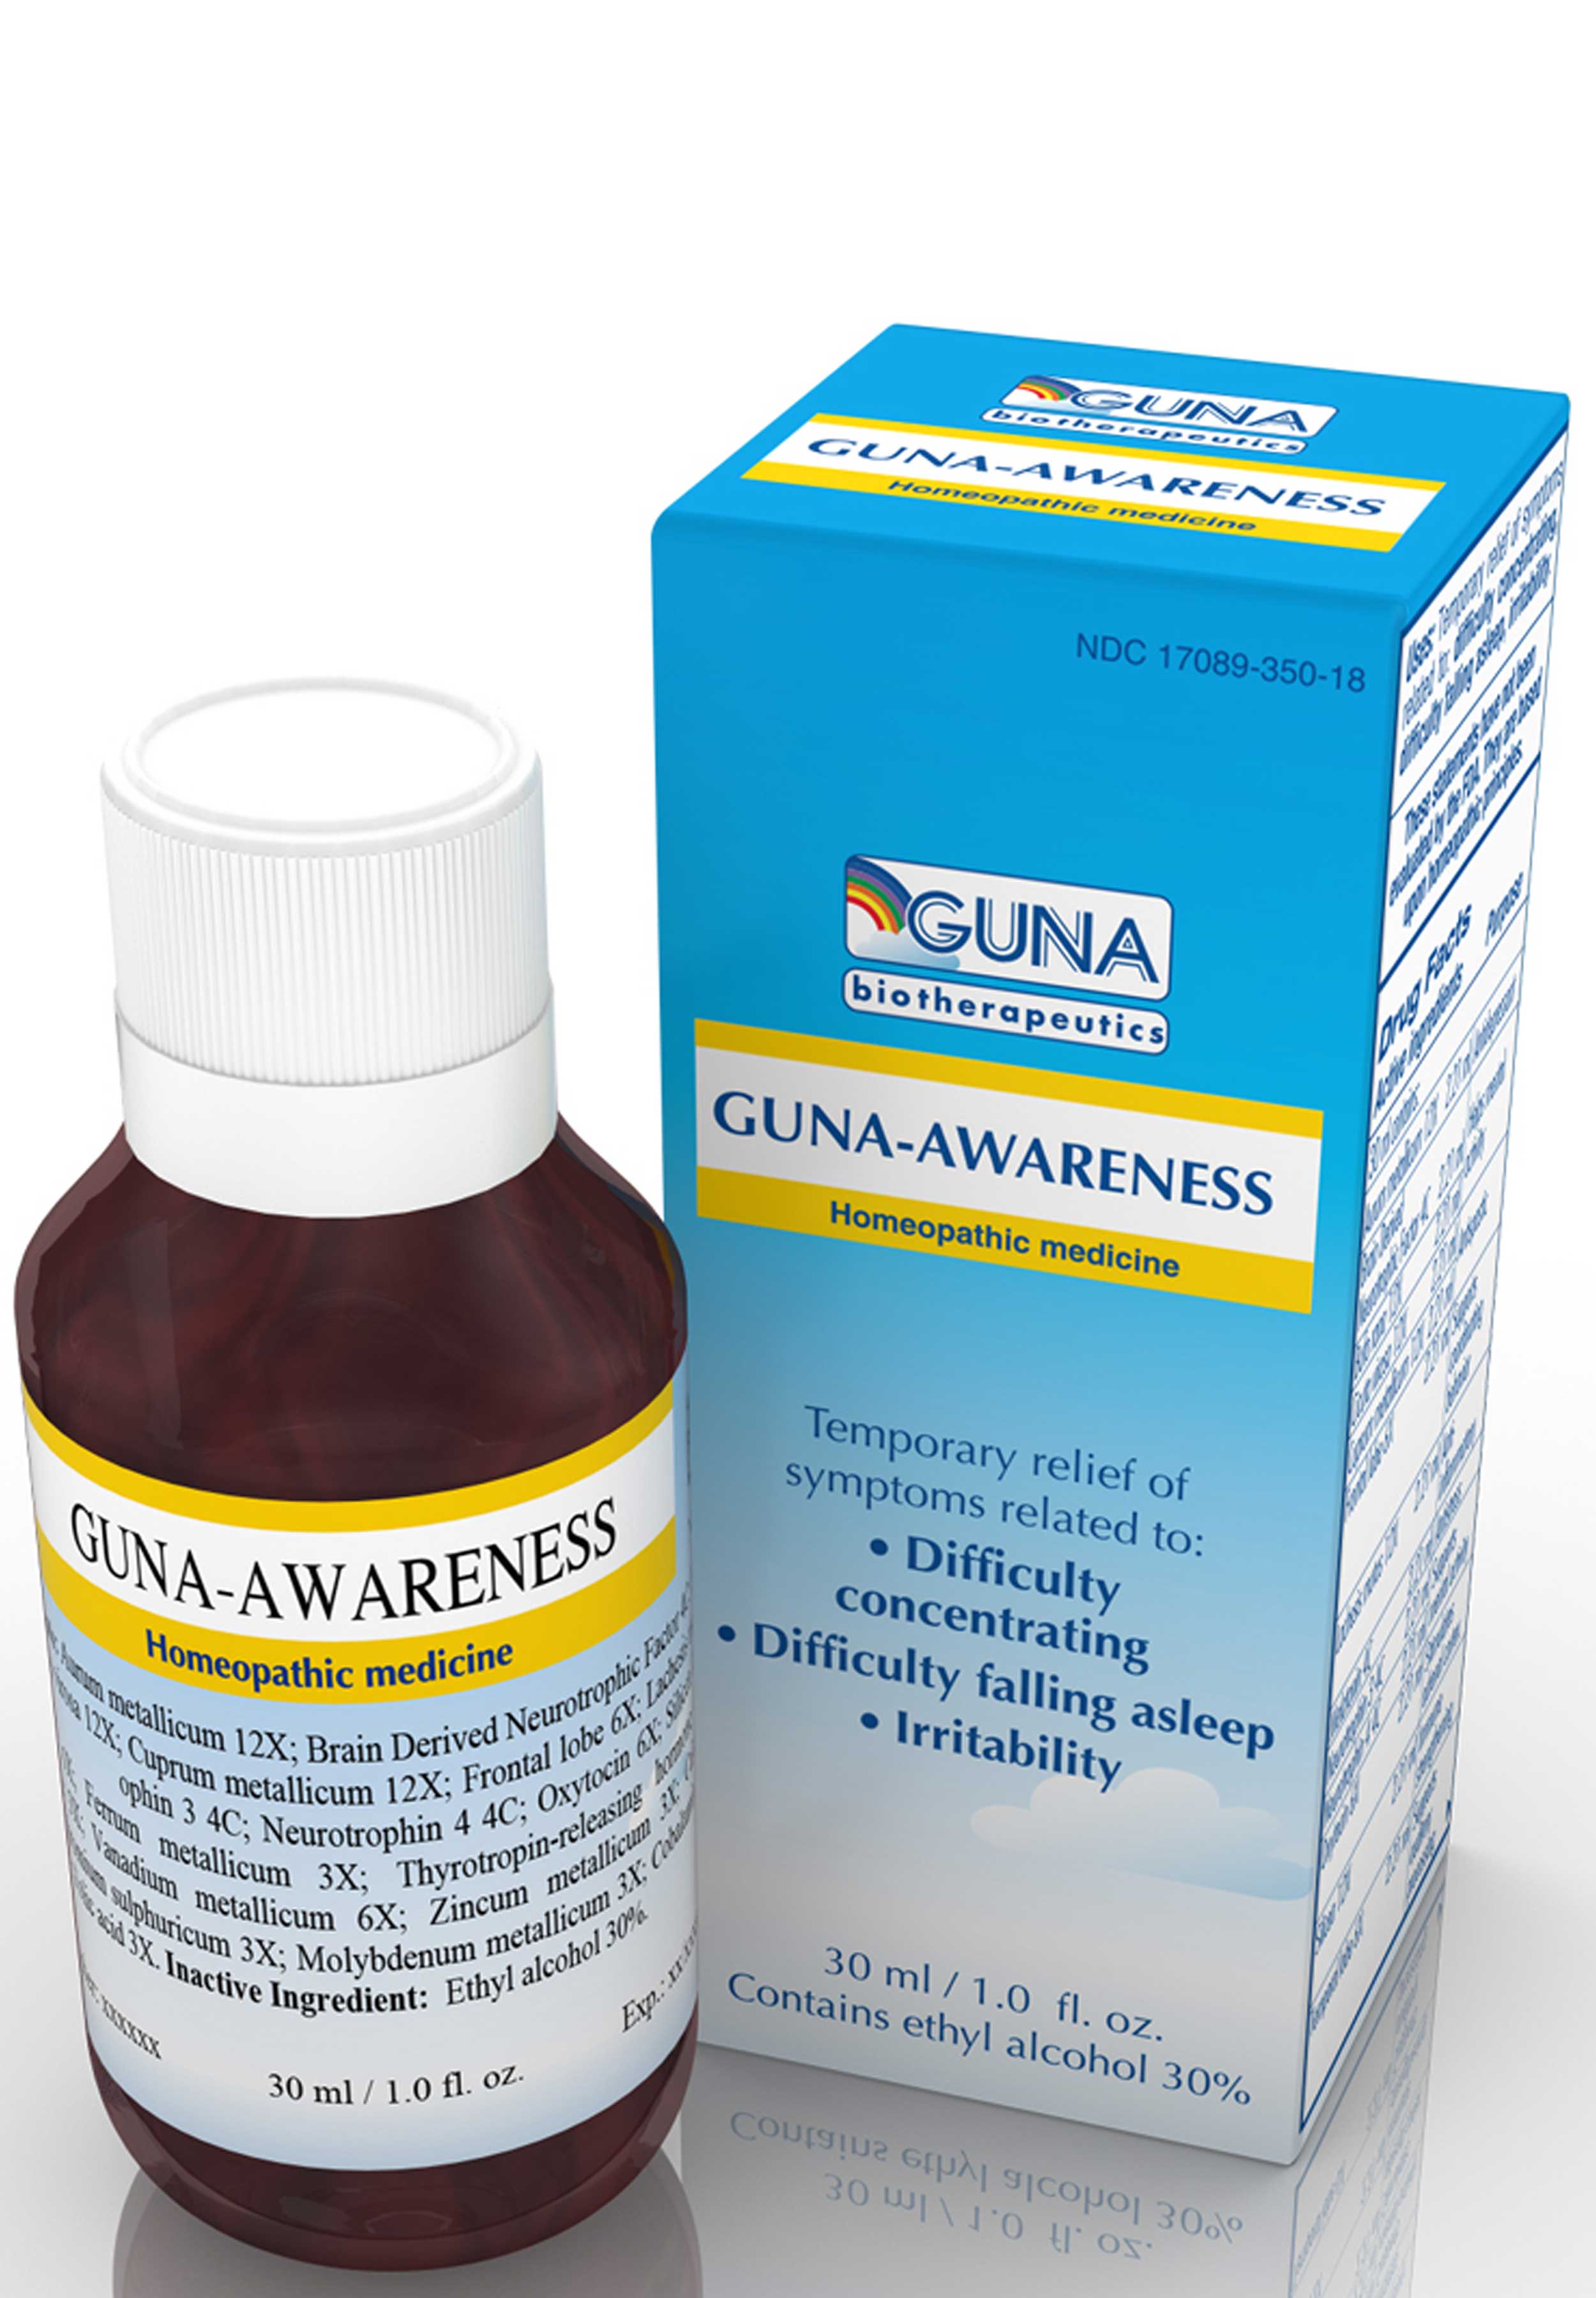 GUNA Biotherapeutics GUNA-AWARENESS